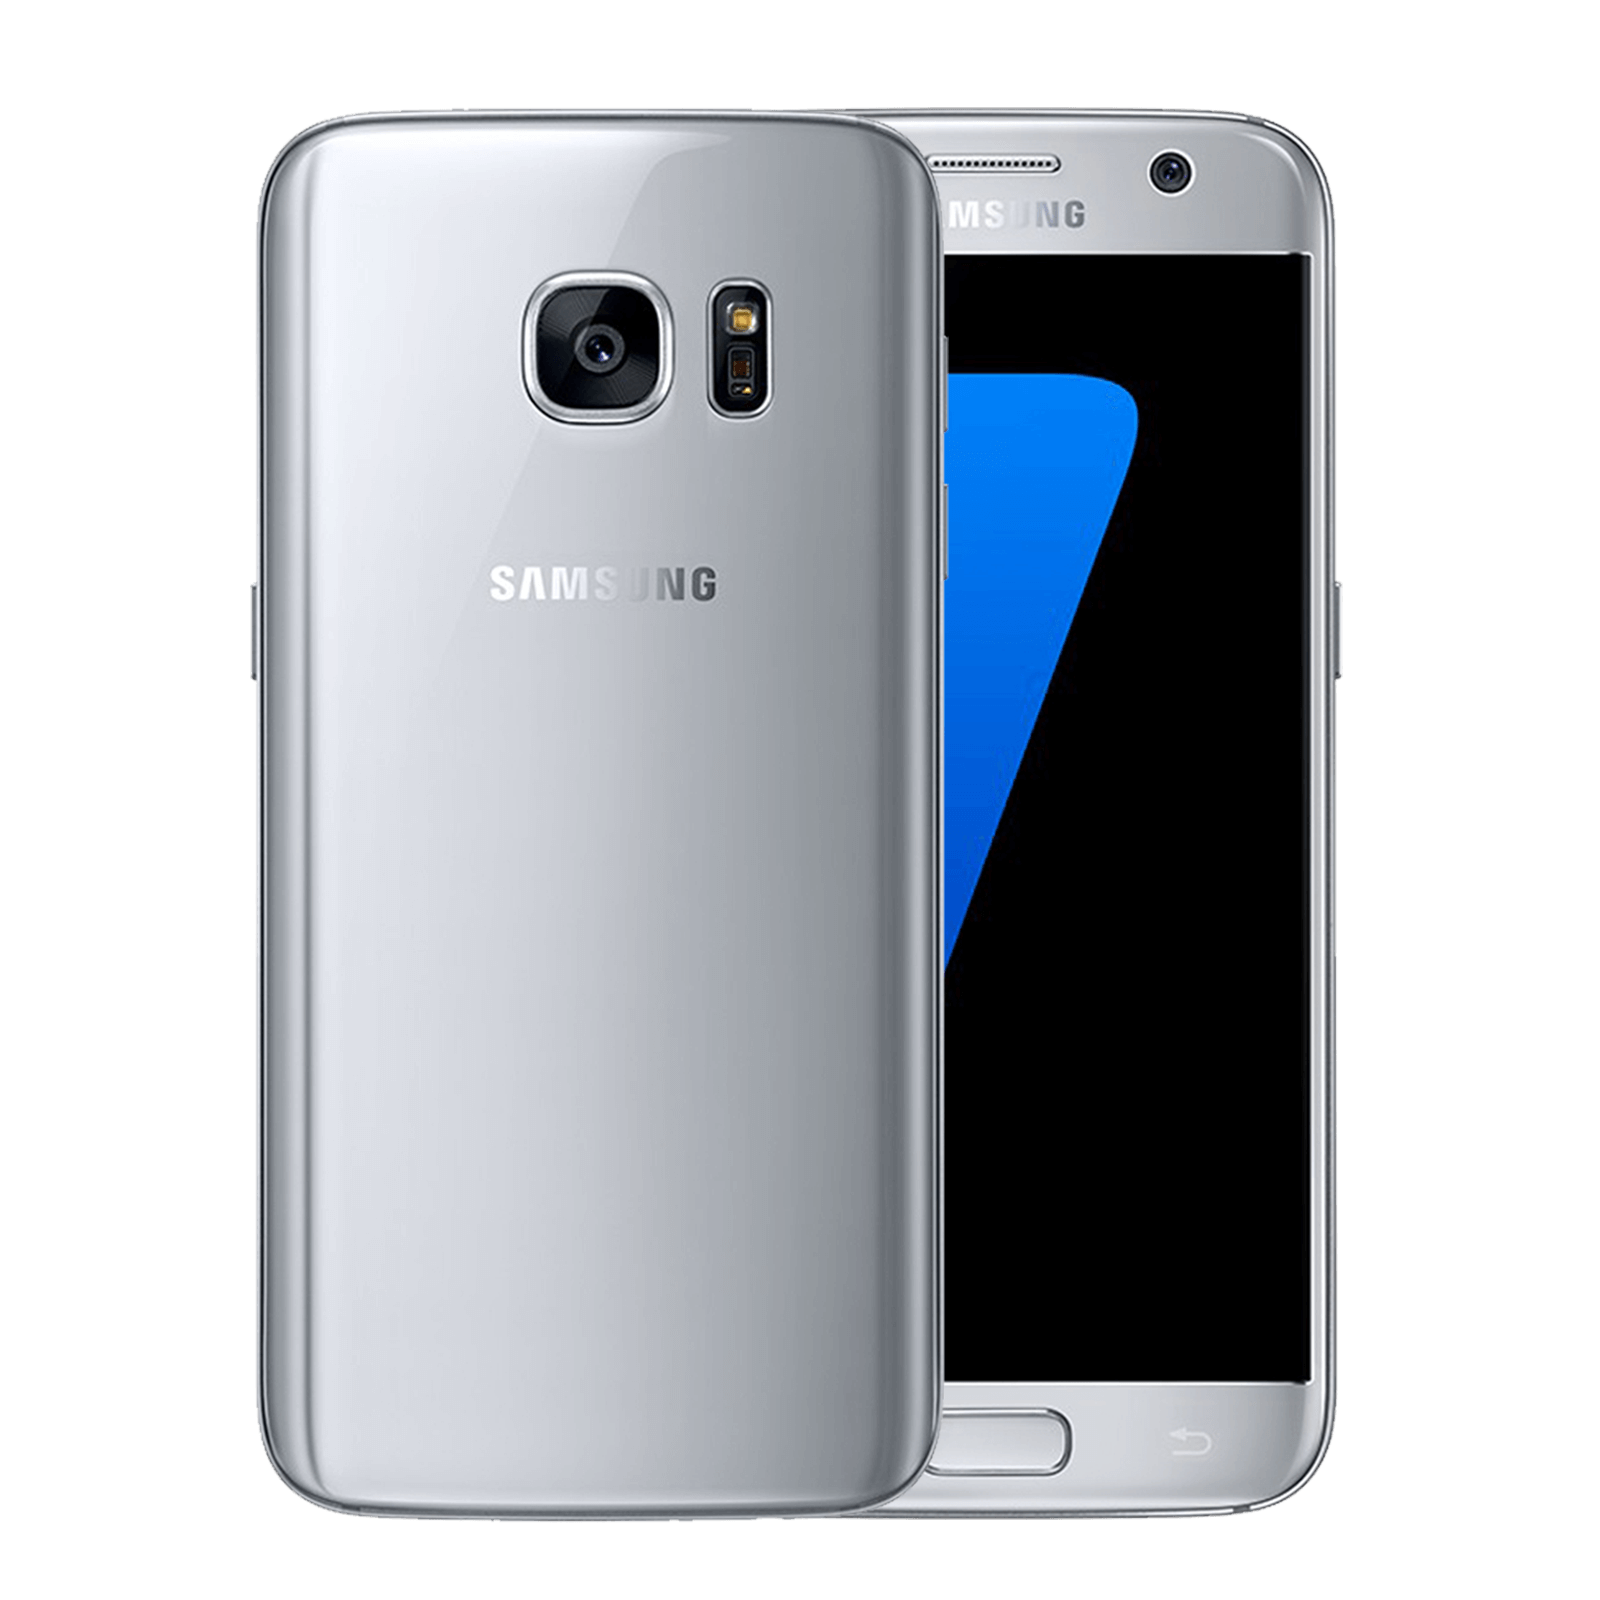 Samsung Galaxy S7 32GB Silver Very good - Unlocked